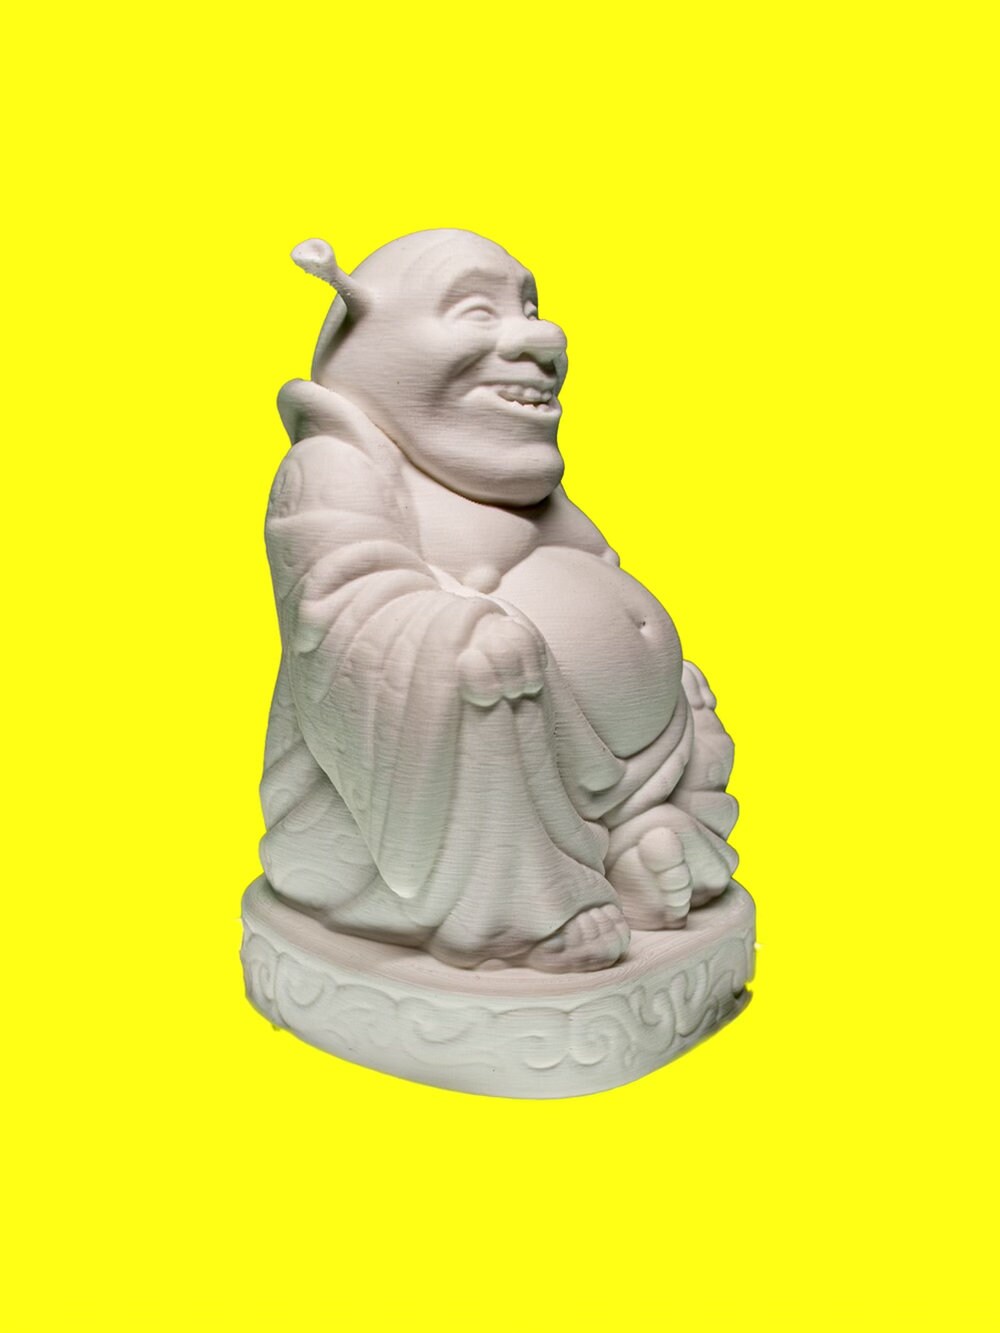 Shrek Buddha Statue, 3D Printed, Home Decor, Desk Ornament, Shrek Figurine,  Multiple Colors and Sizes Available 